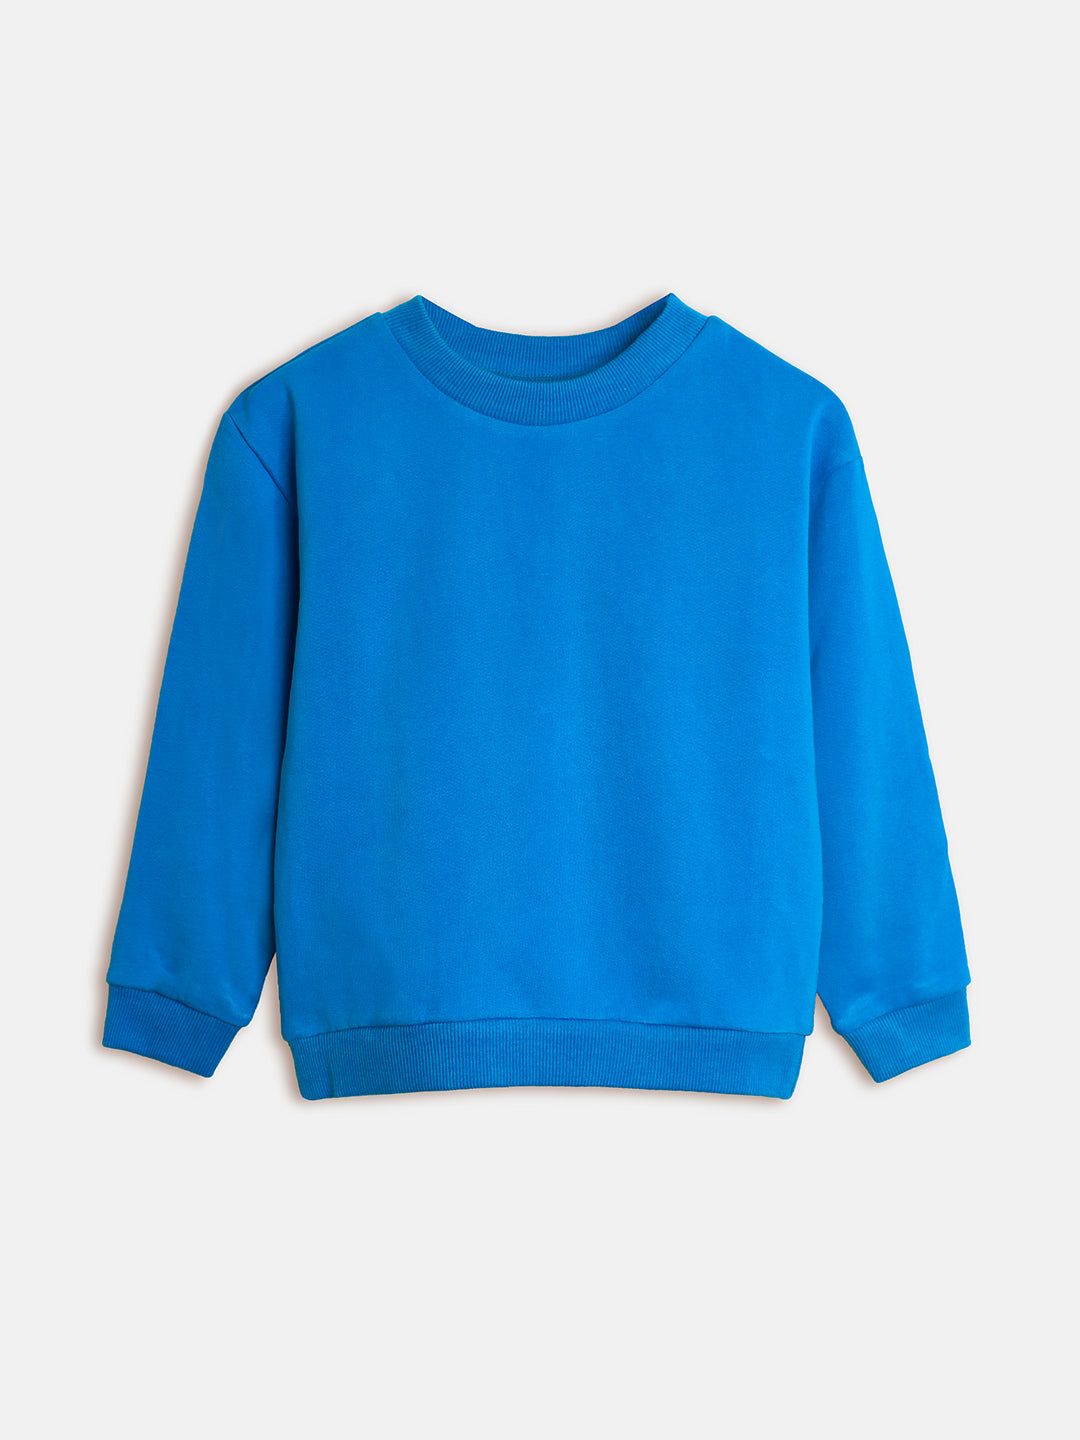 Blue solid light weight sweatshirt